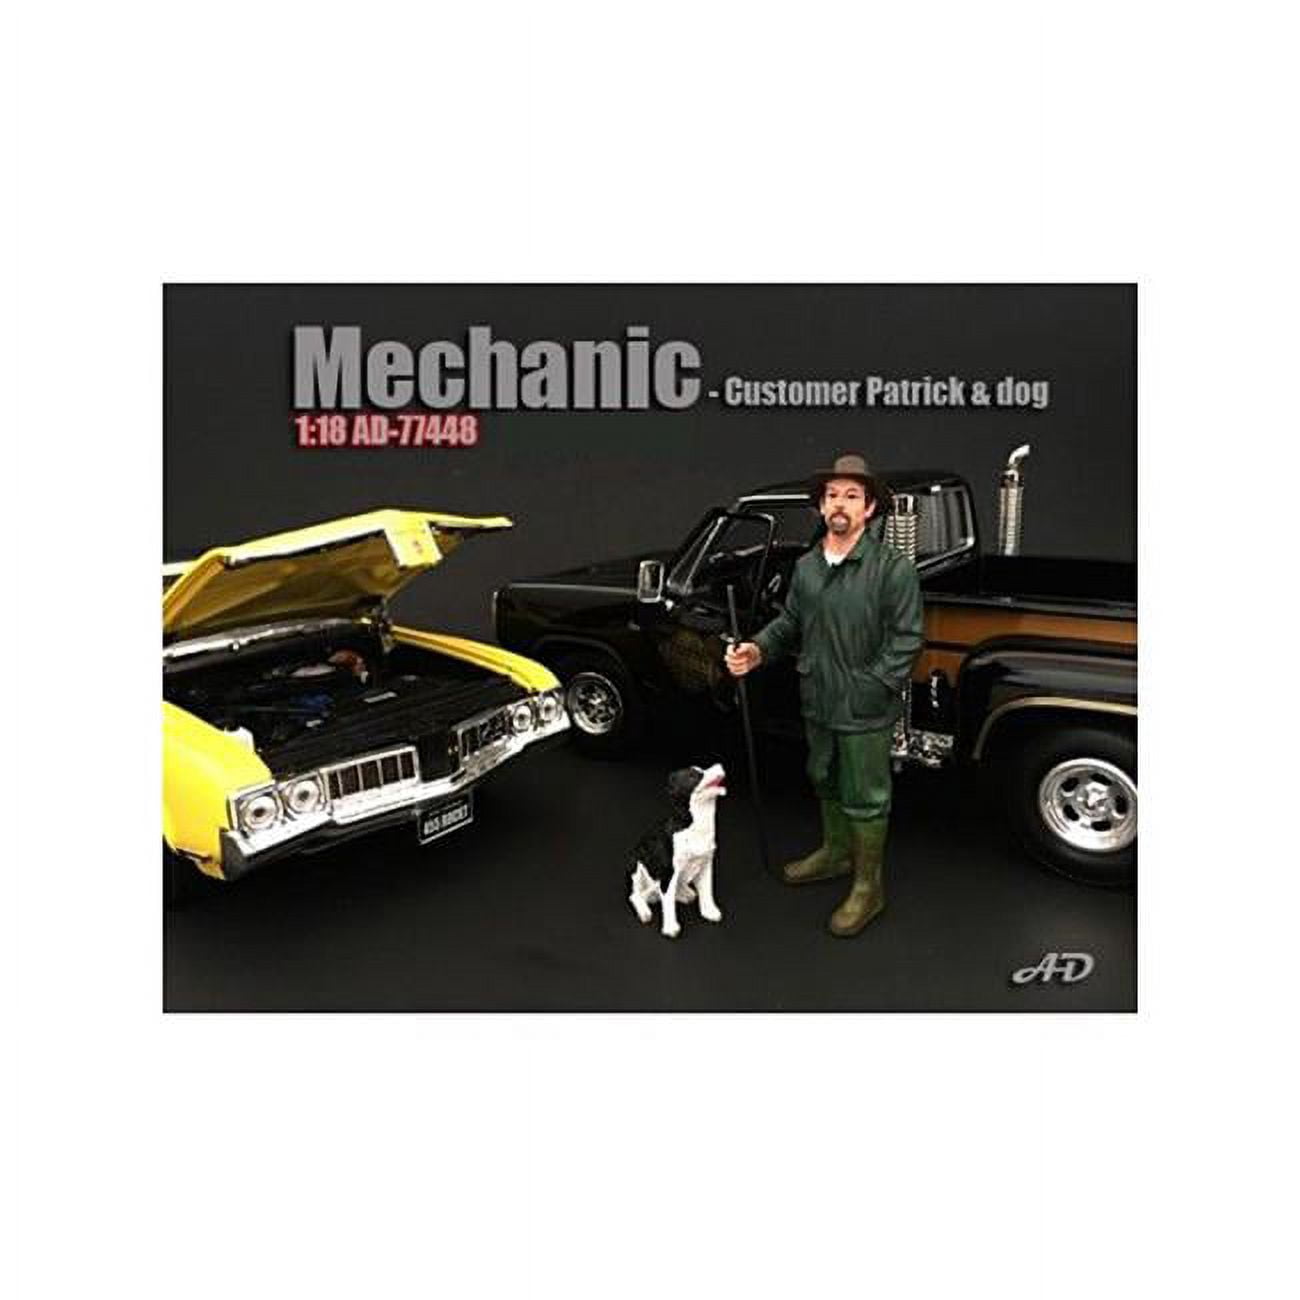 Picture of American Diorama 77448 Customer Patrick & A Dog Figurine & Figure for 1 isto 18 Diecast Model Car